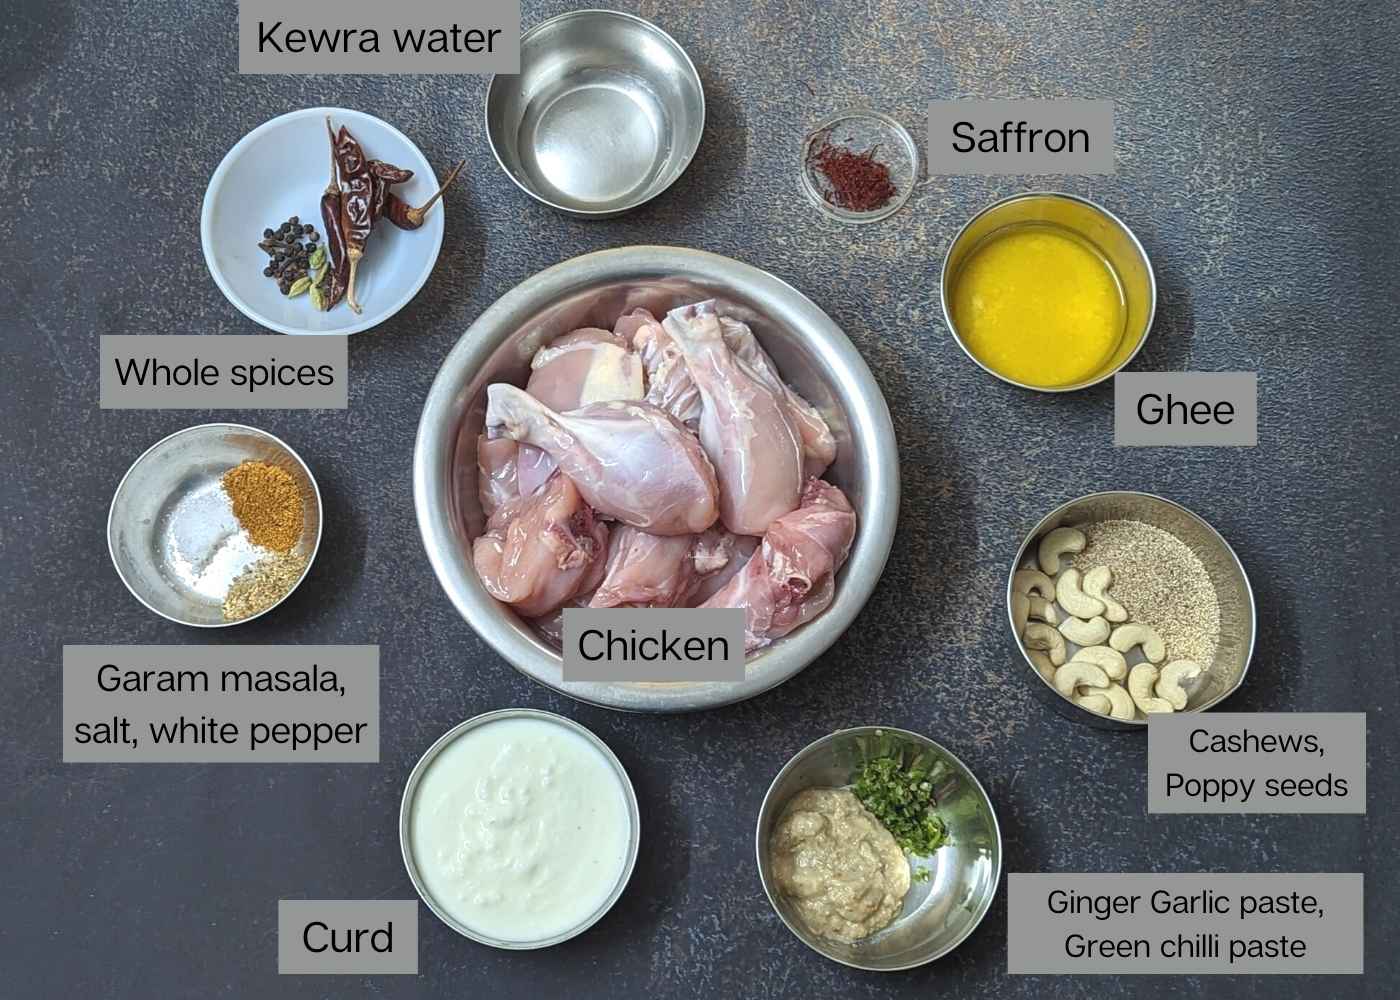 Ingredients for chicken rezala in a frame: bone-in chicken pieces, ghee, saffron, cashews, poppy seeds, whole spices, kewra water, spices, yogurt, ginger garlic paste and green chilli paste.